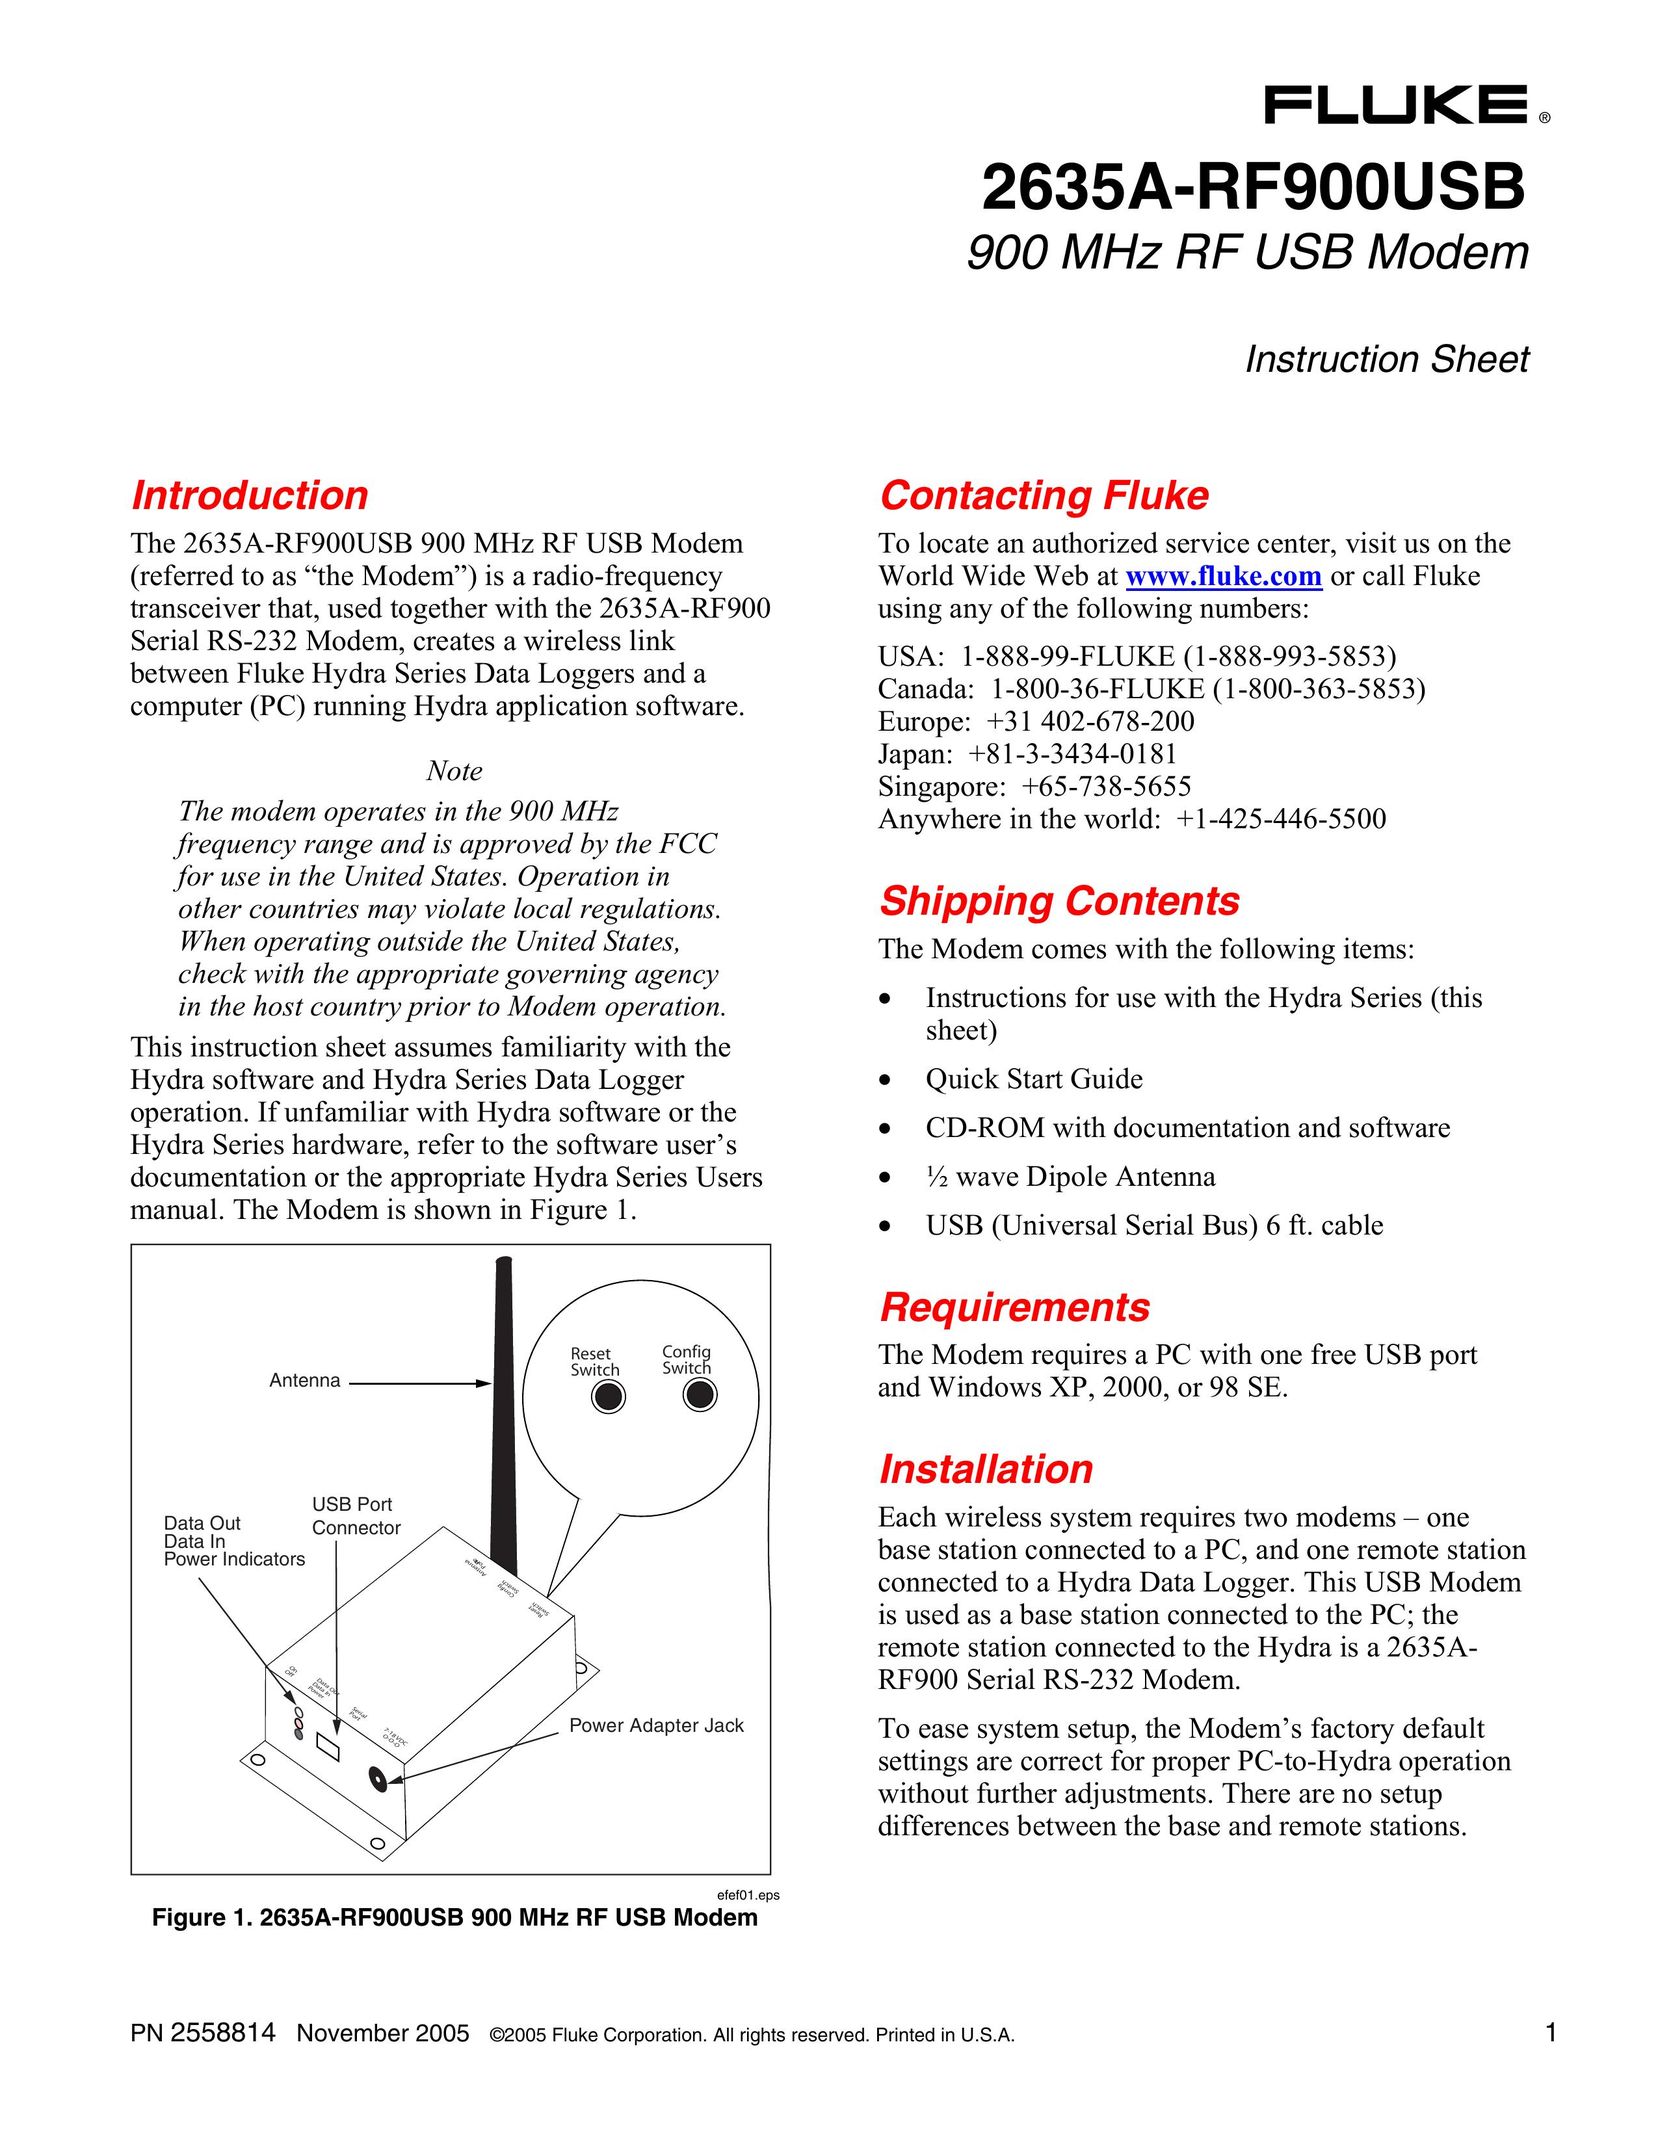 Fluke 2635A-RF900USB Modem User Manual